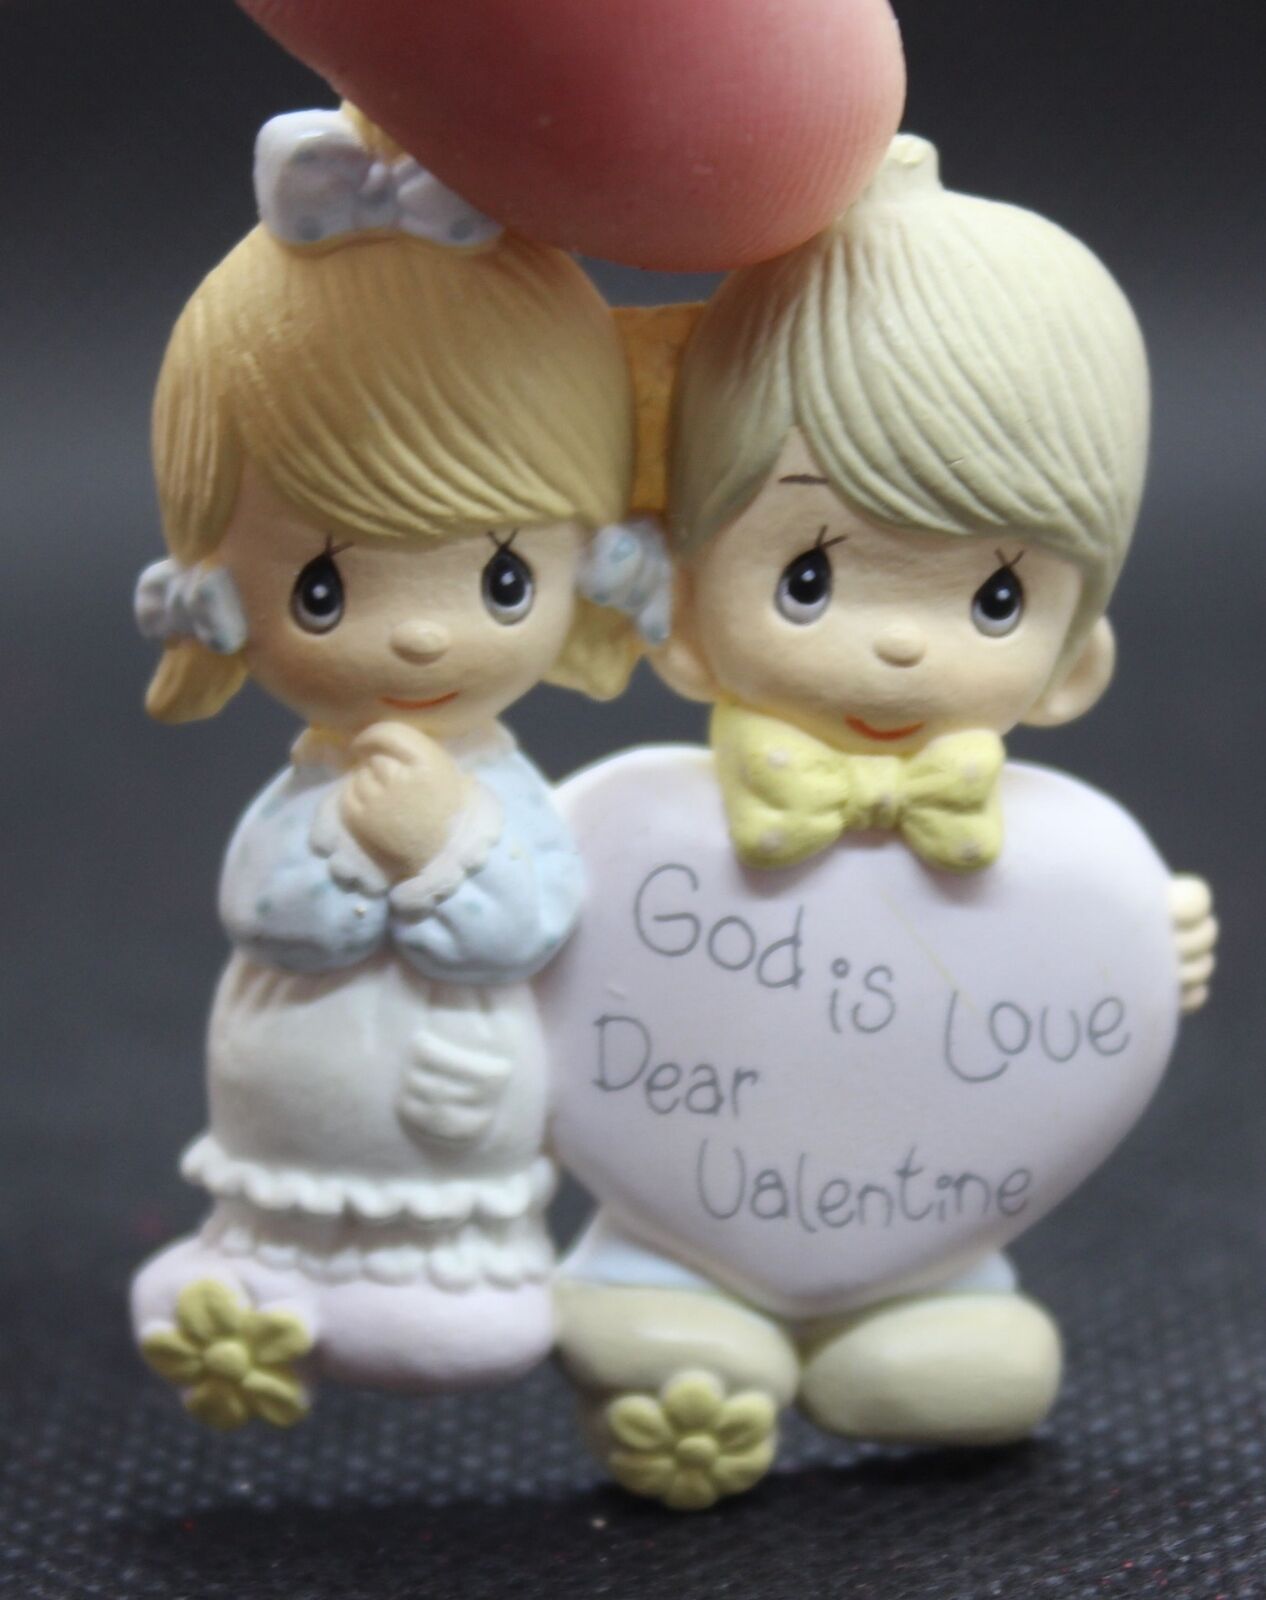 NWT Vintage 1988 Precious Moments God is Love Dear Valentine Boy Girl Brooch Pin